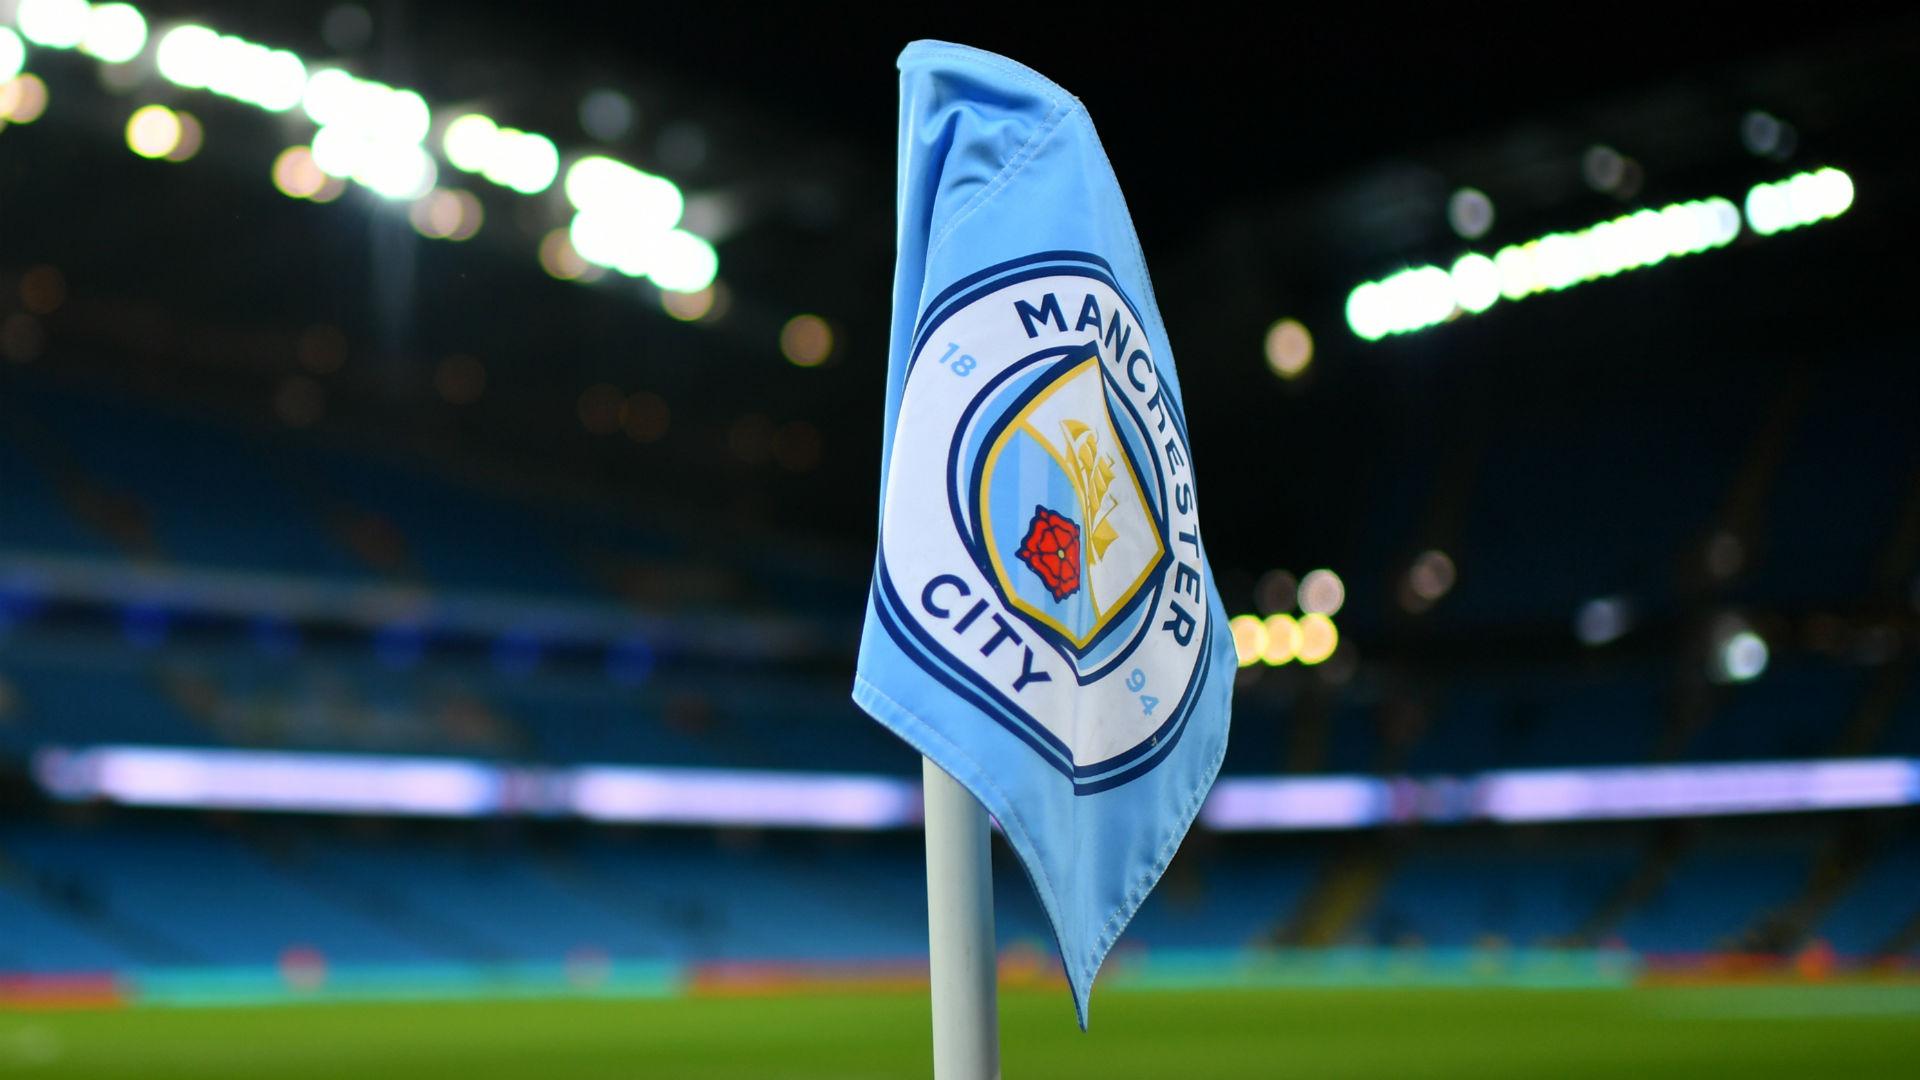 Manchester City Face No Action Over 'allez' Chant City